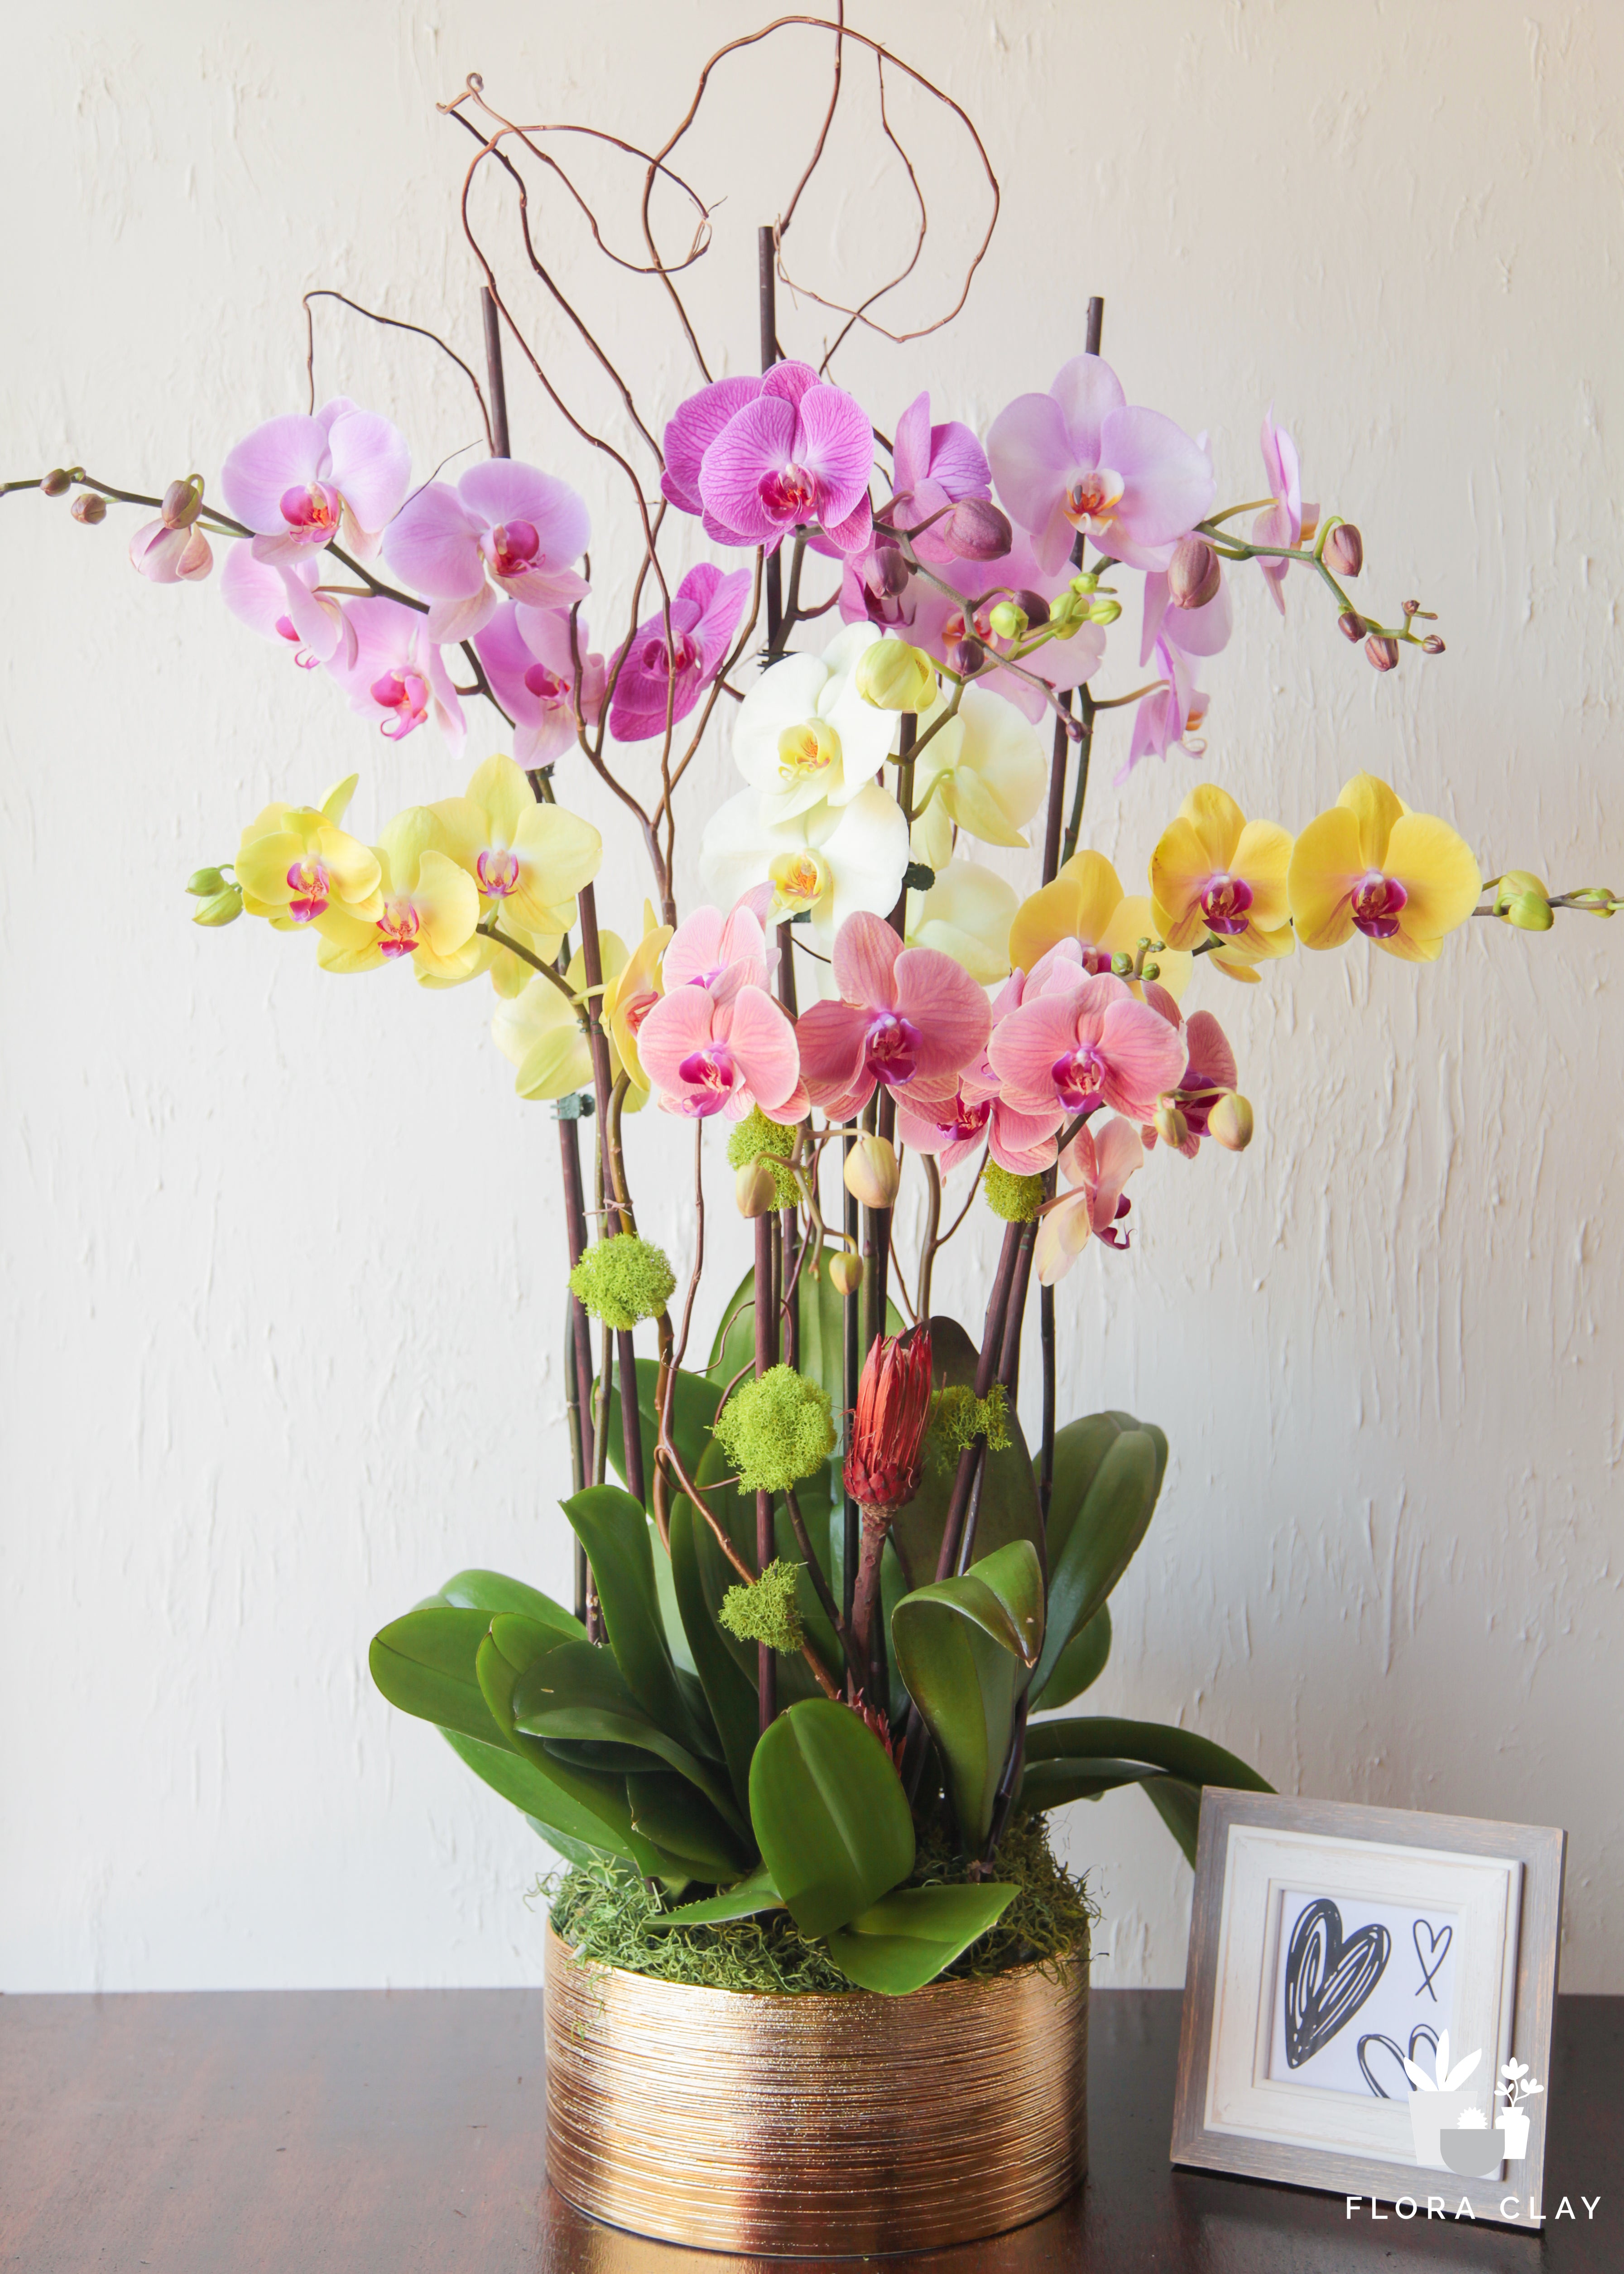 my-world-orchid-arrangement-floraclay-1_9e5de21d-5722-4b19-9dc5-8cb17fcd678c.jpg